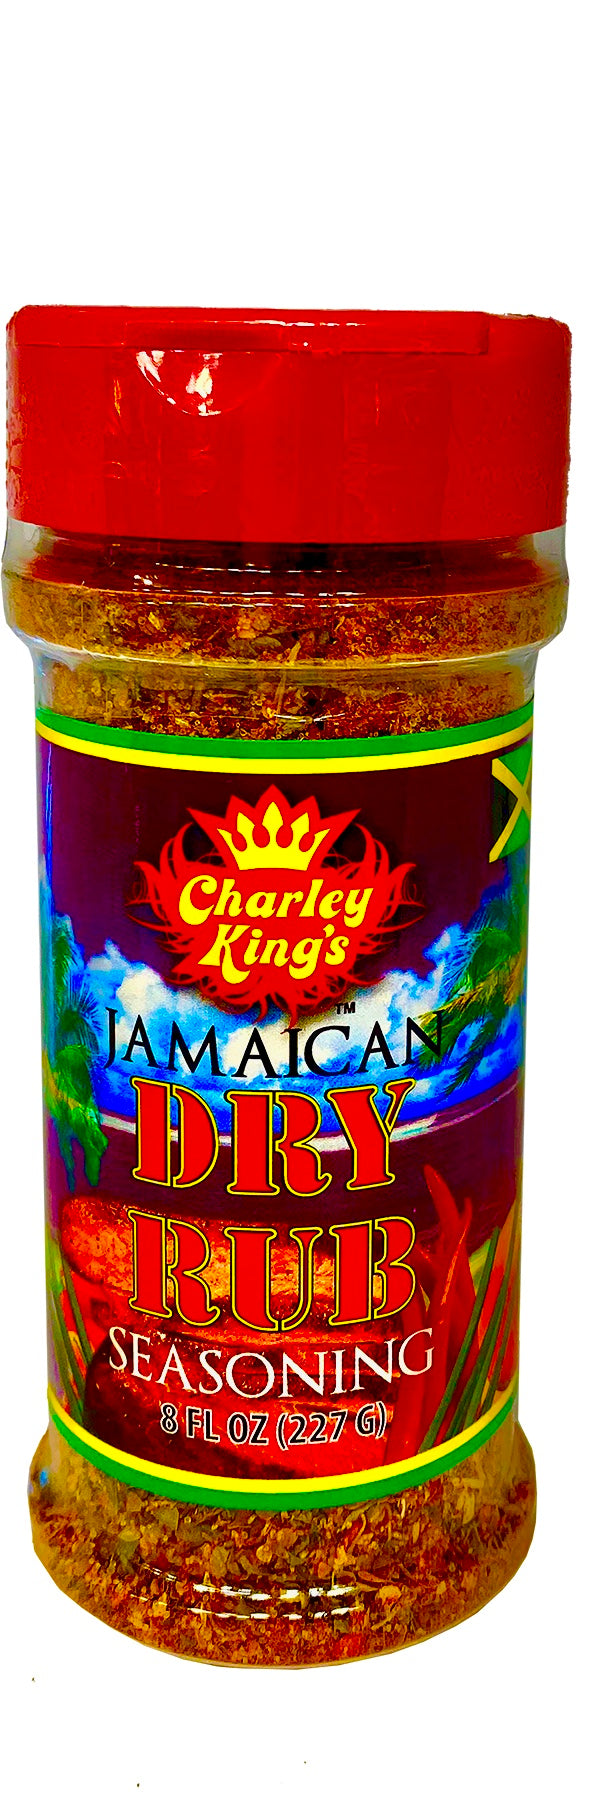 Jamaican Dry Rub